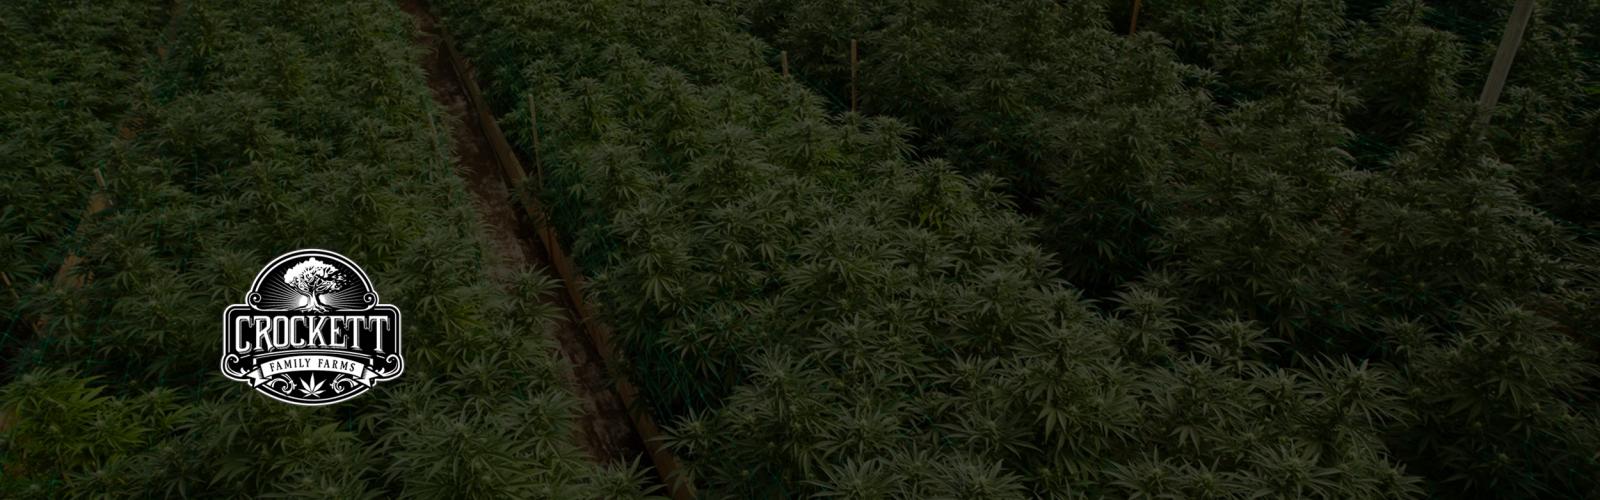 Crockett Family Farms Regular Cannabis Seeds